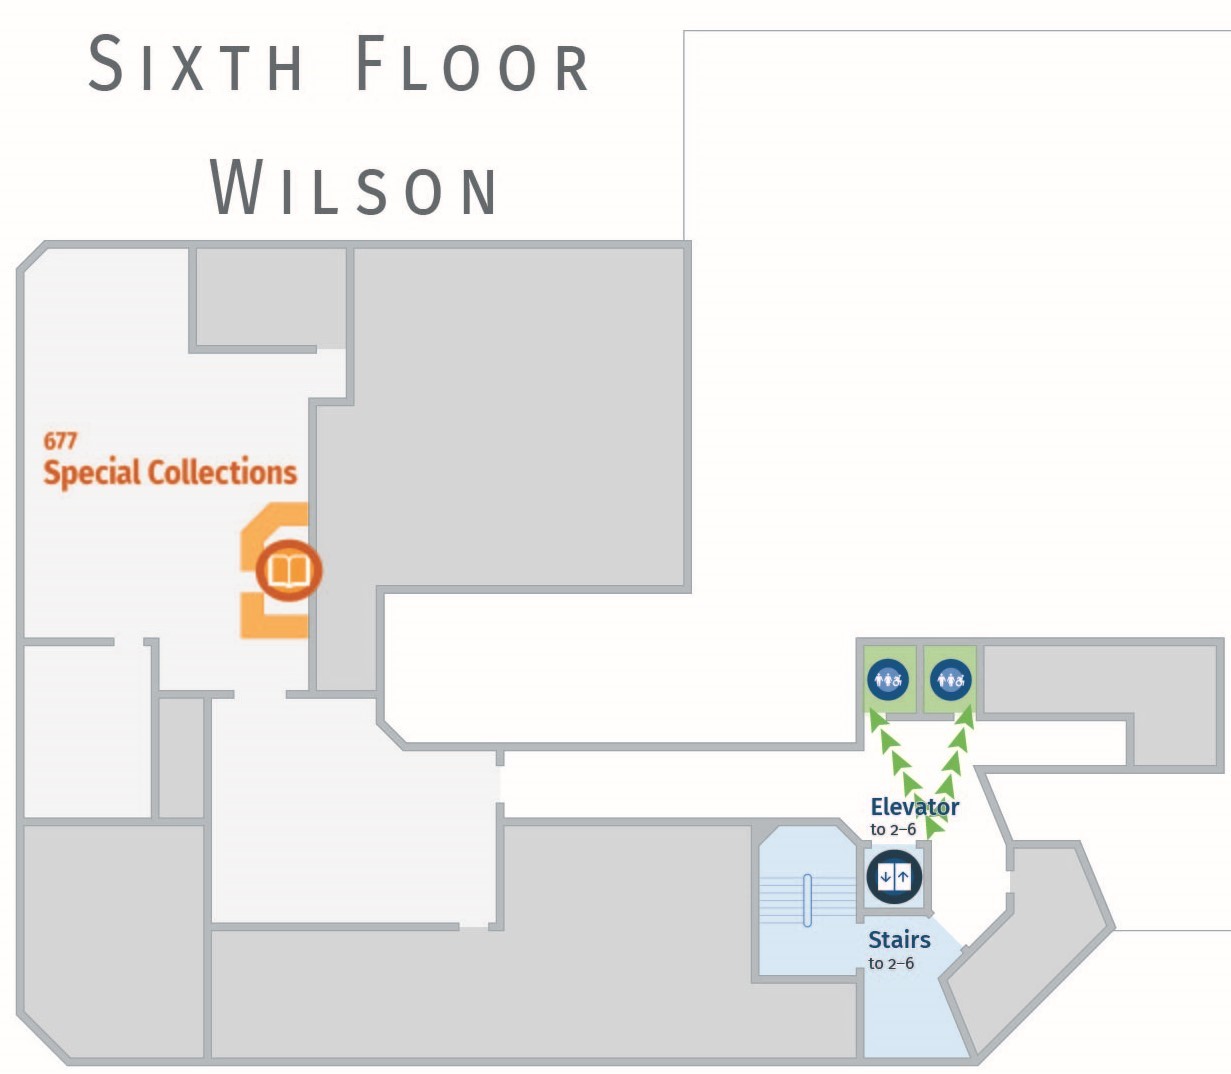 Floor plan, sixth floor of Wilson with paths to gender-neutral restrooms.